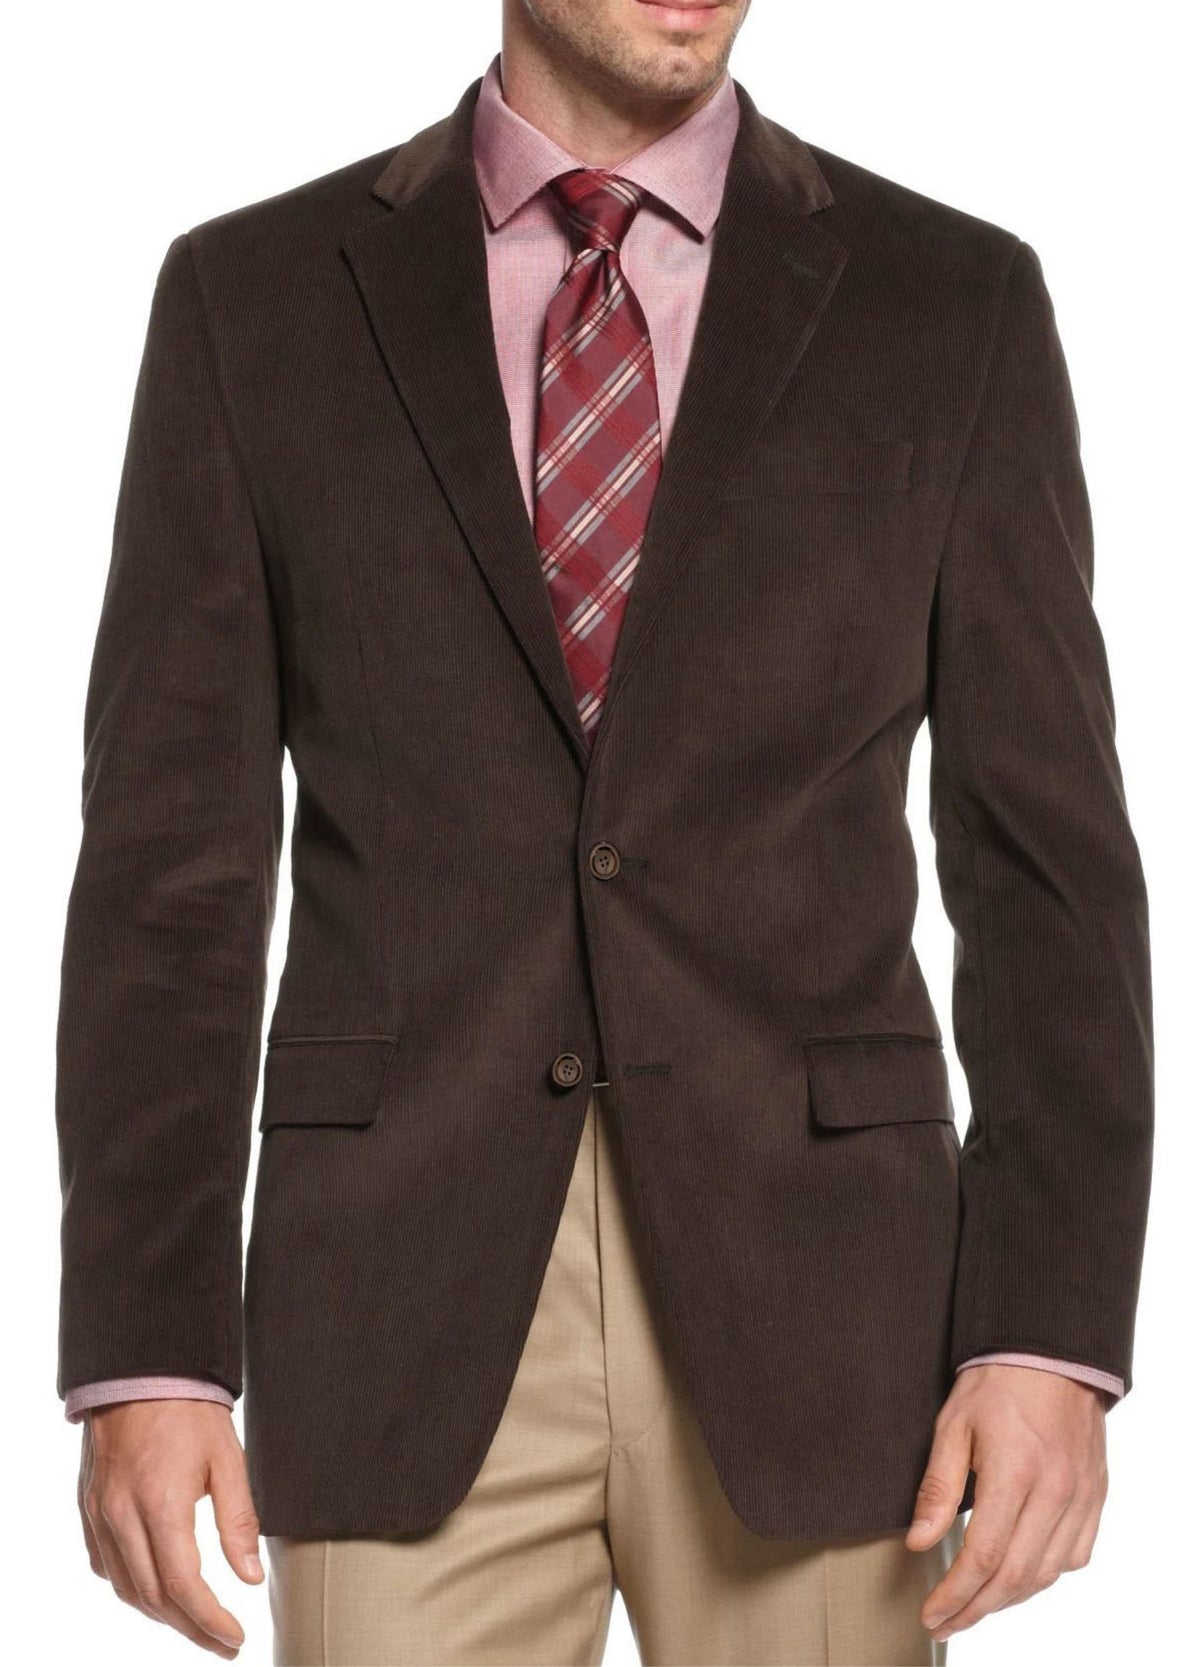 Men's Corduroy Sport Coat Blazer Jacket Brown SkinOutfit